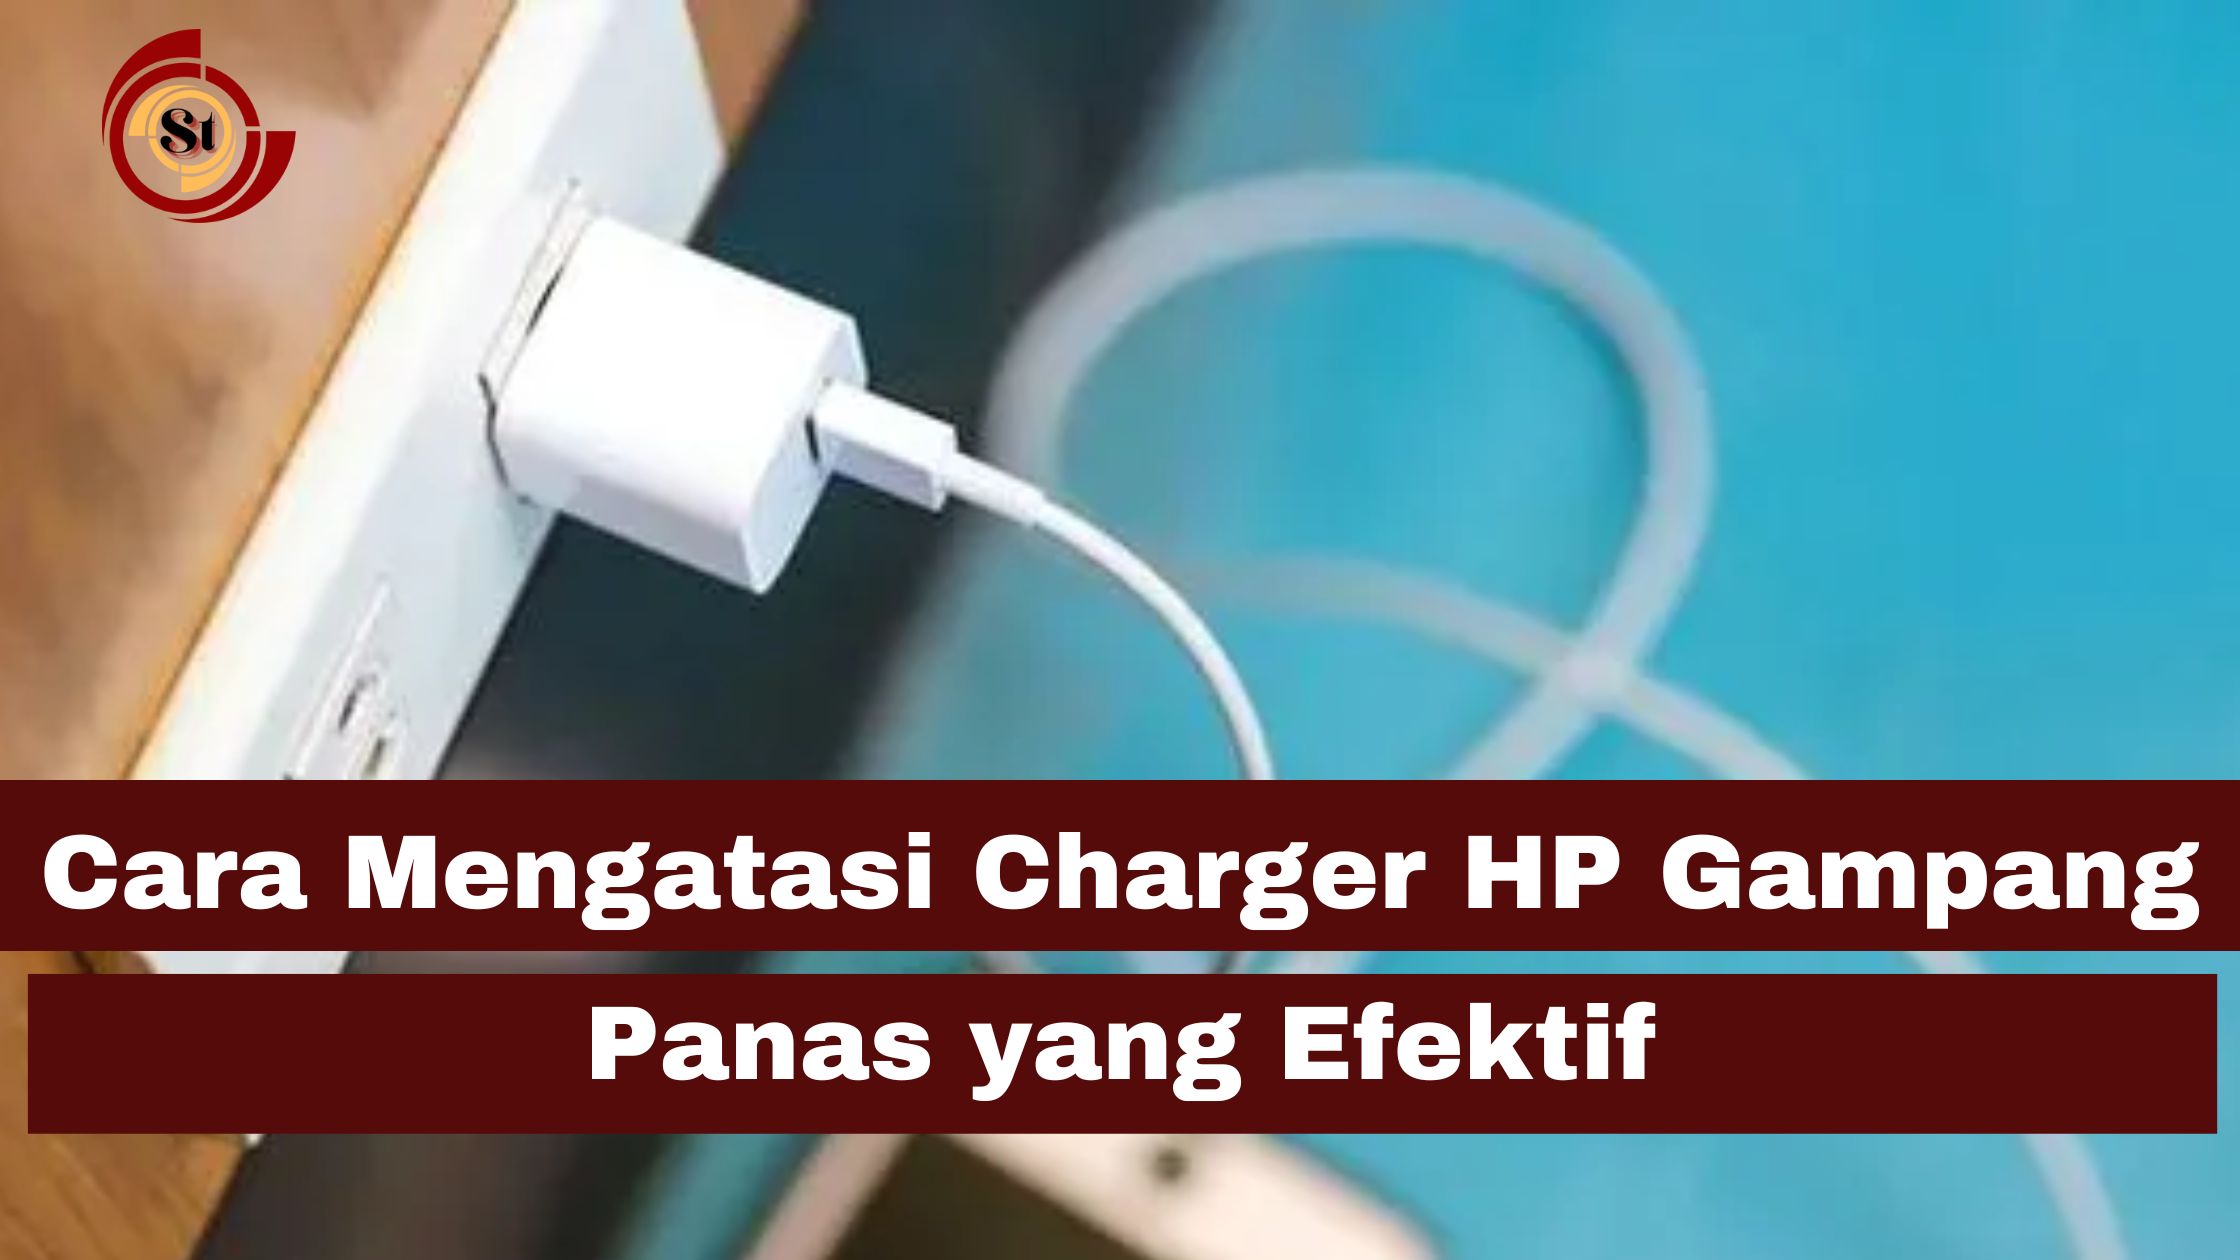 Cara Mengatasi Charger HP Gampang Panas